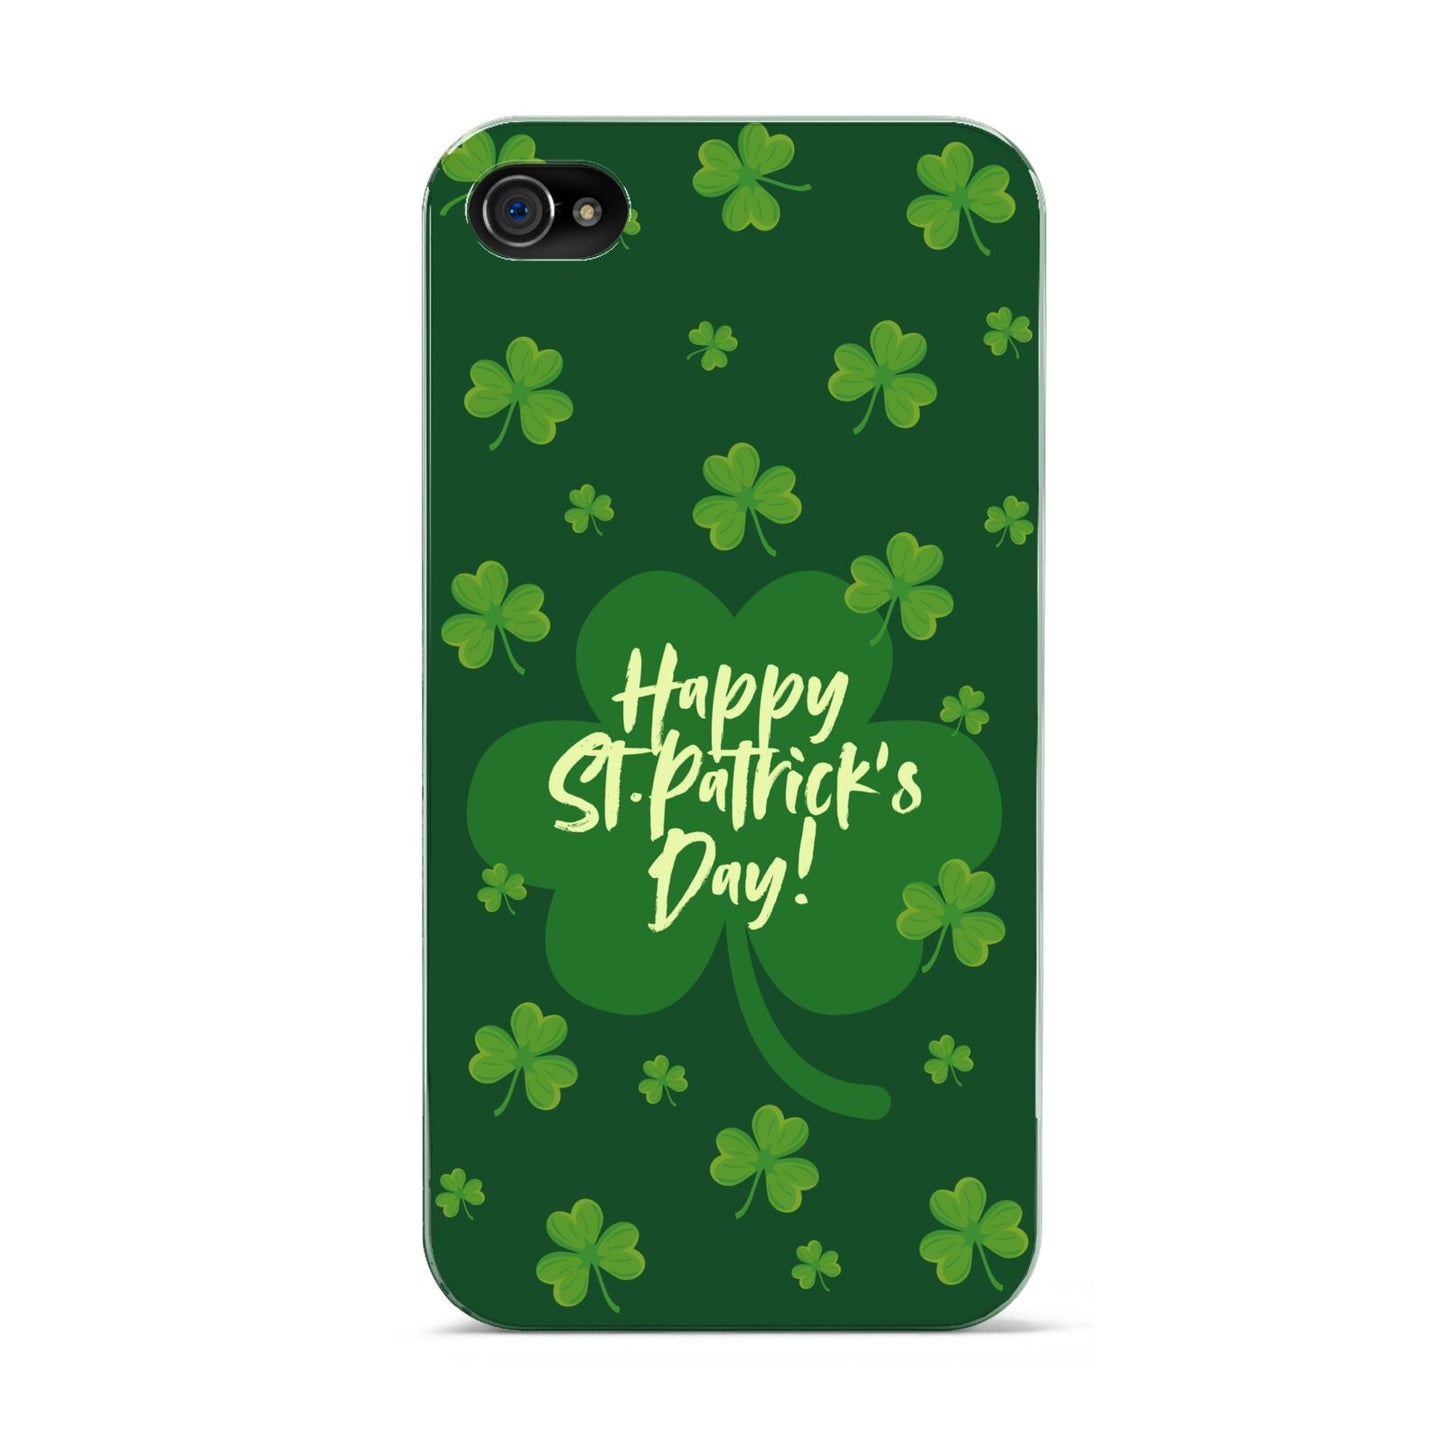 Happy St Patricks Day Apple iPhone 4s Case